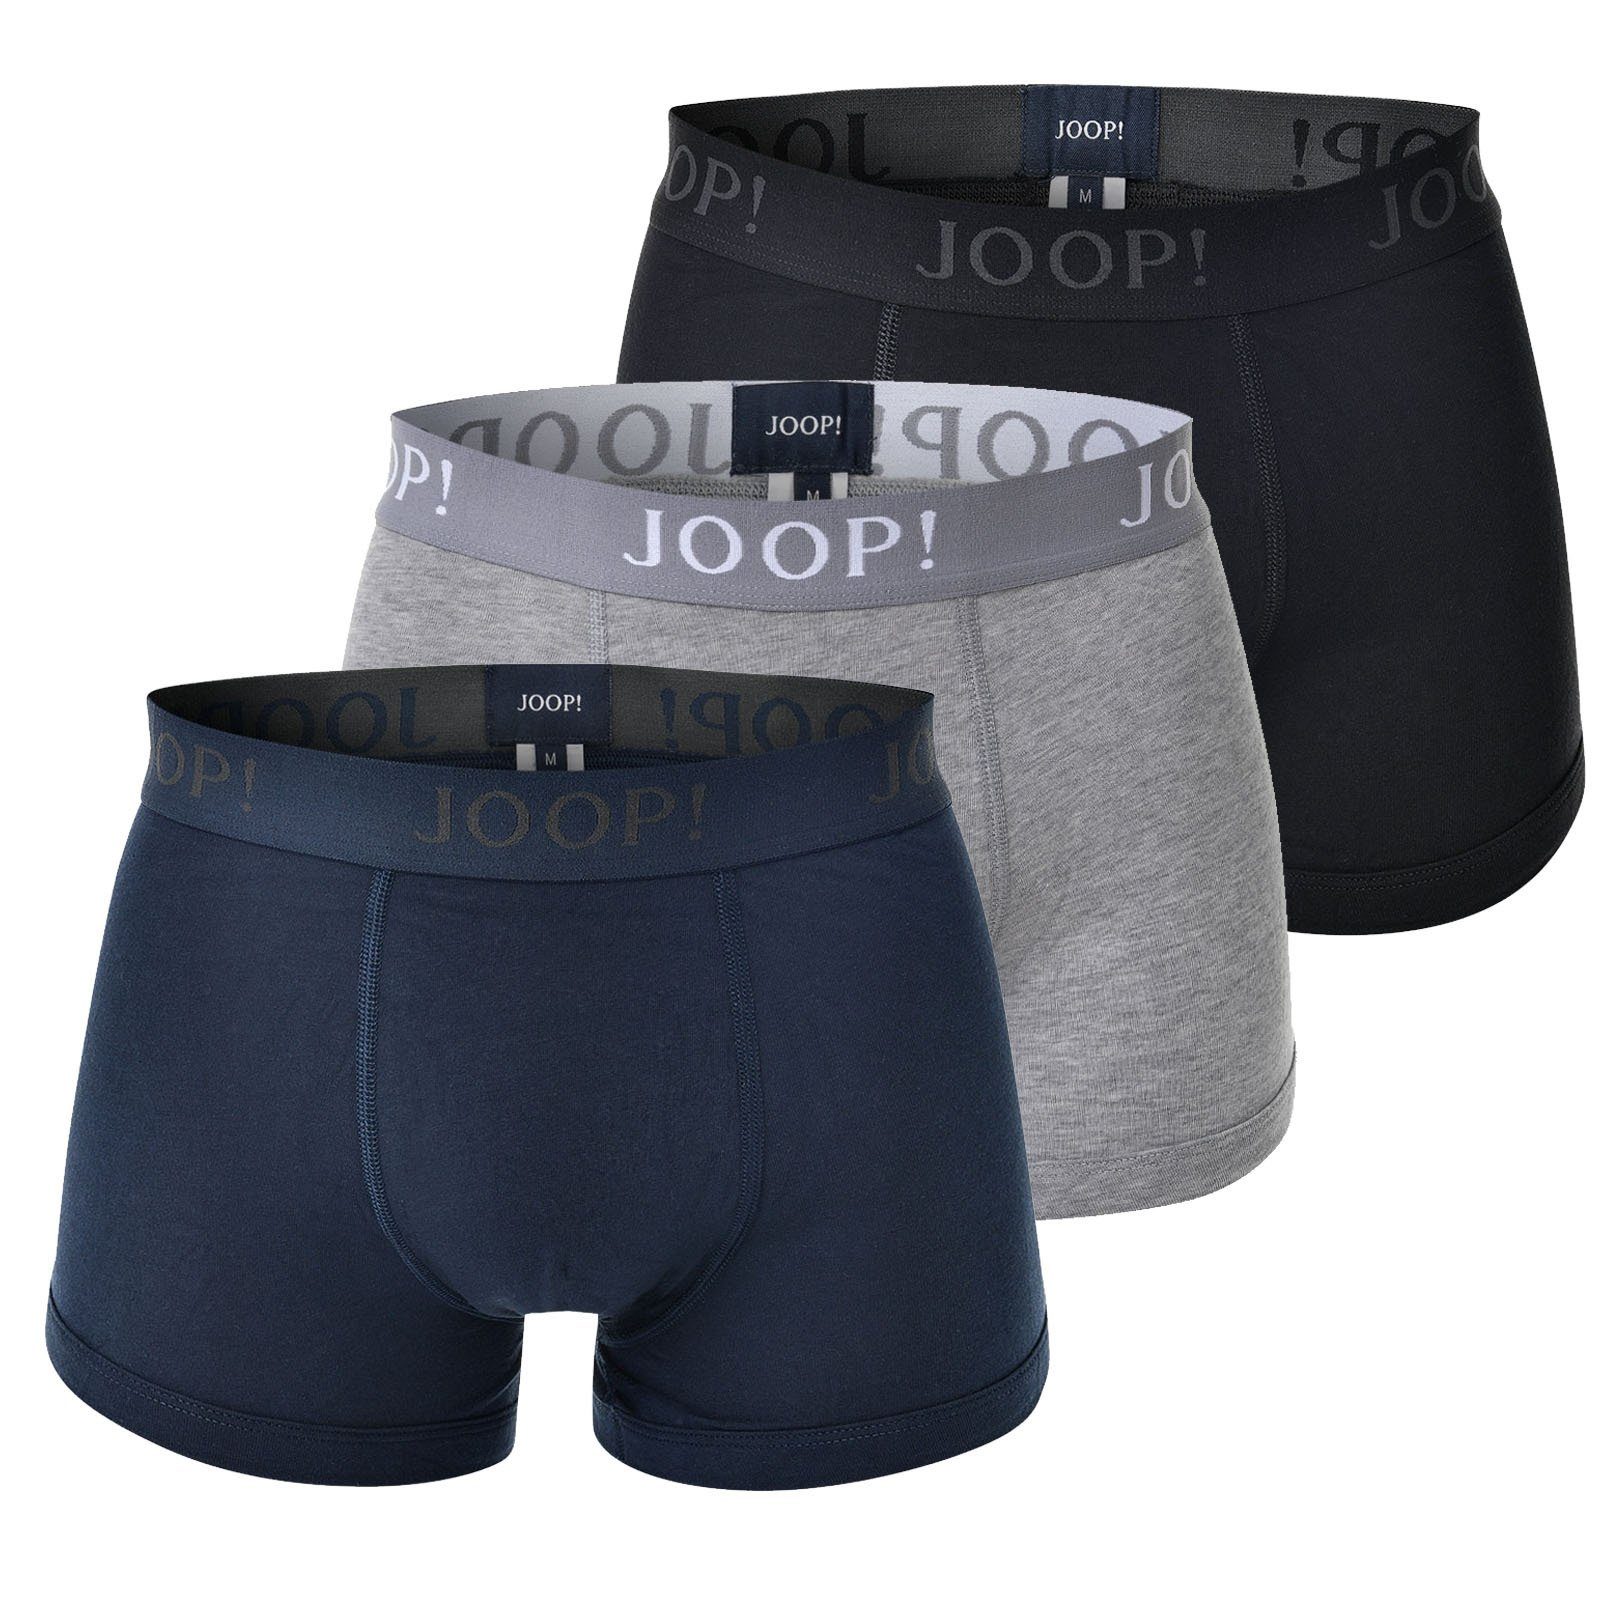 Joop! Boxer Herren Boxer Shorts, 3er Pack - Fine Cotton Mehrfarbig